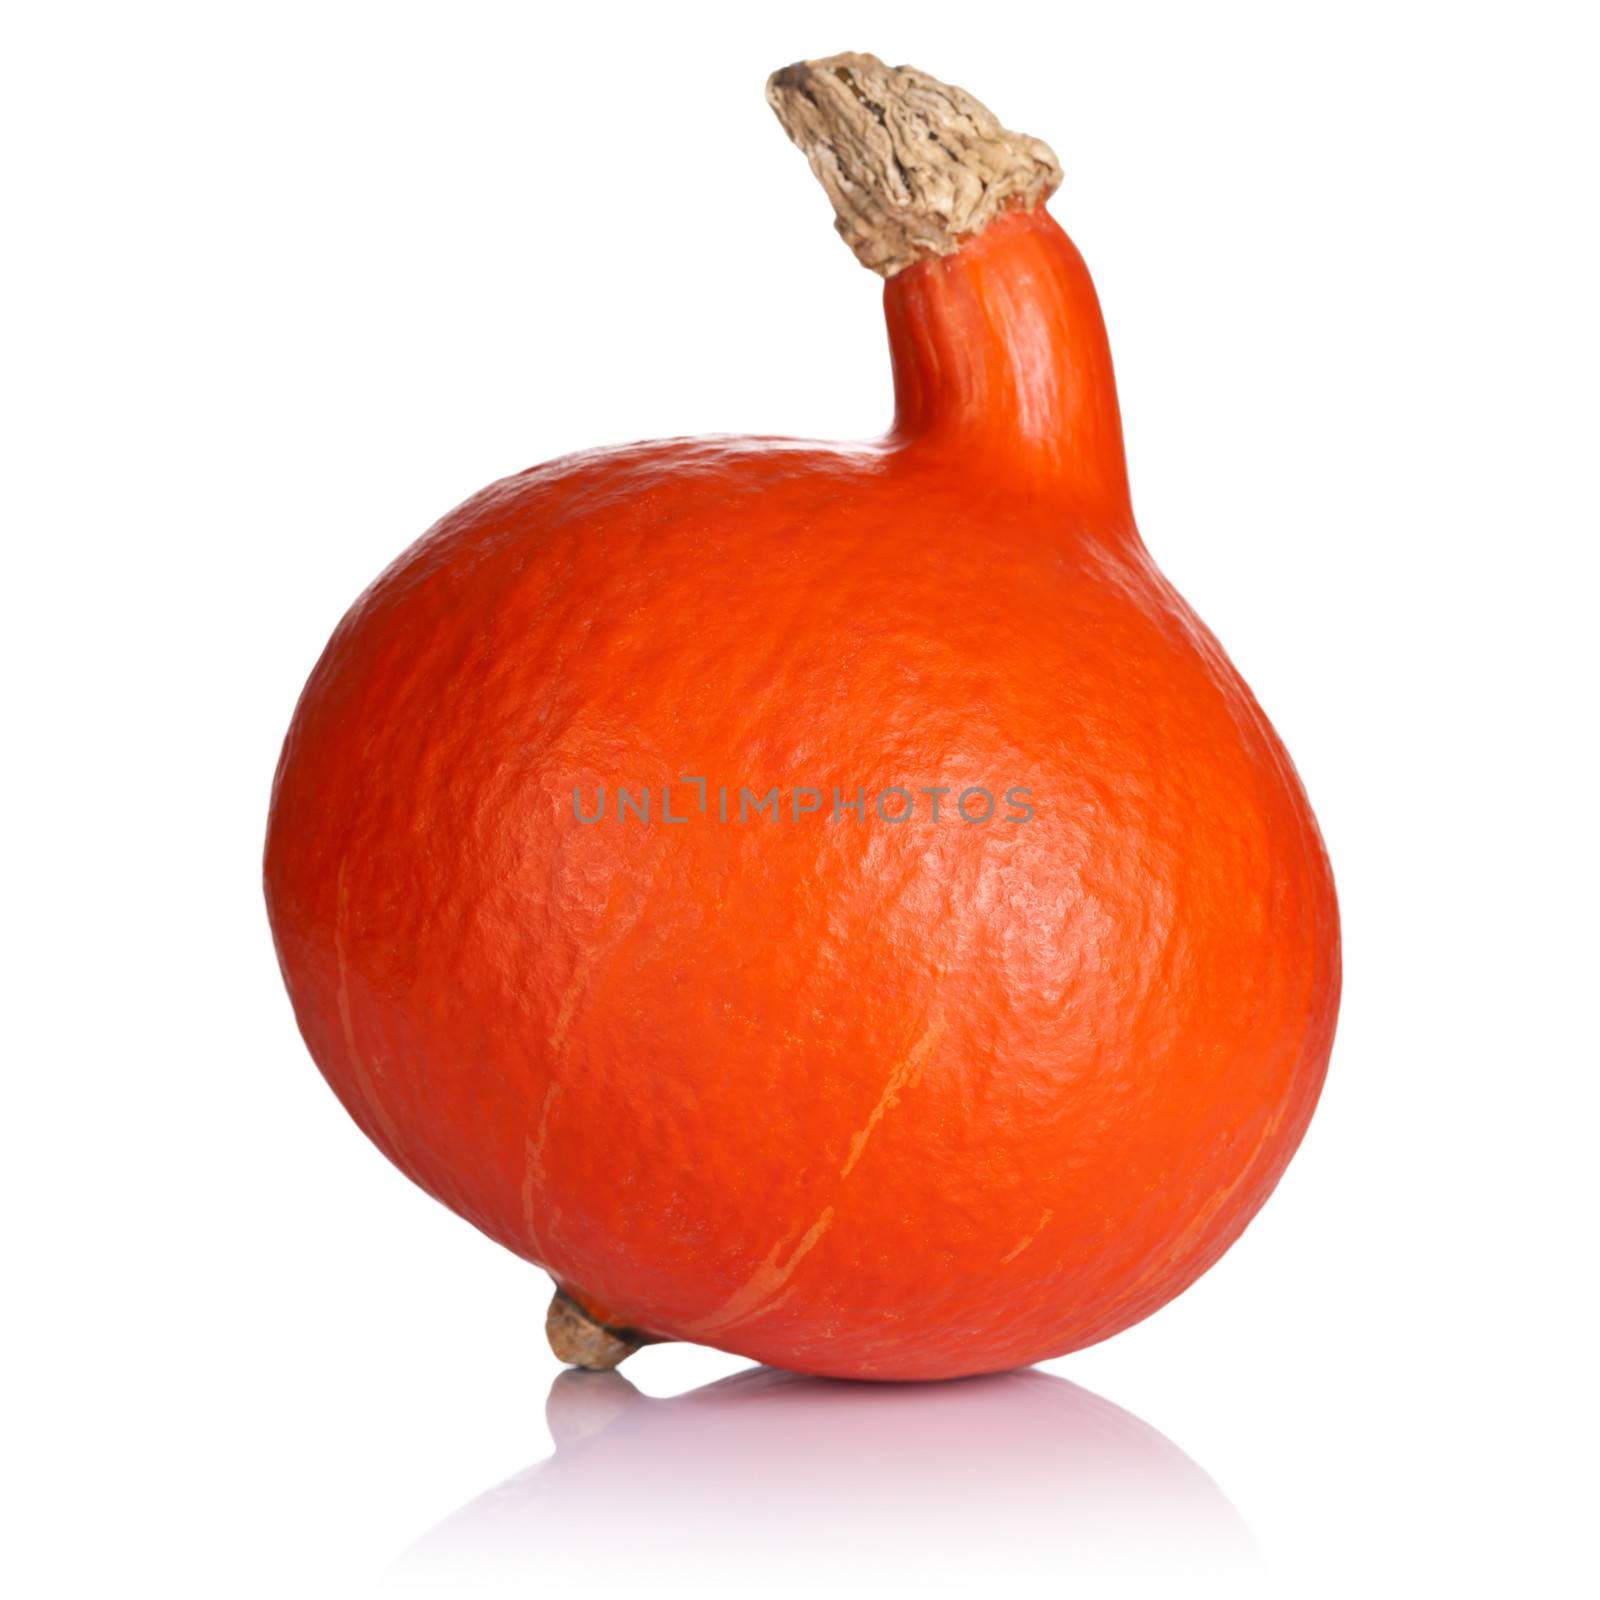 Orange pumpkin on white background. Fresh and ripe